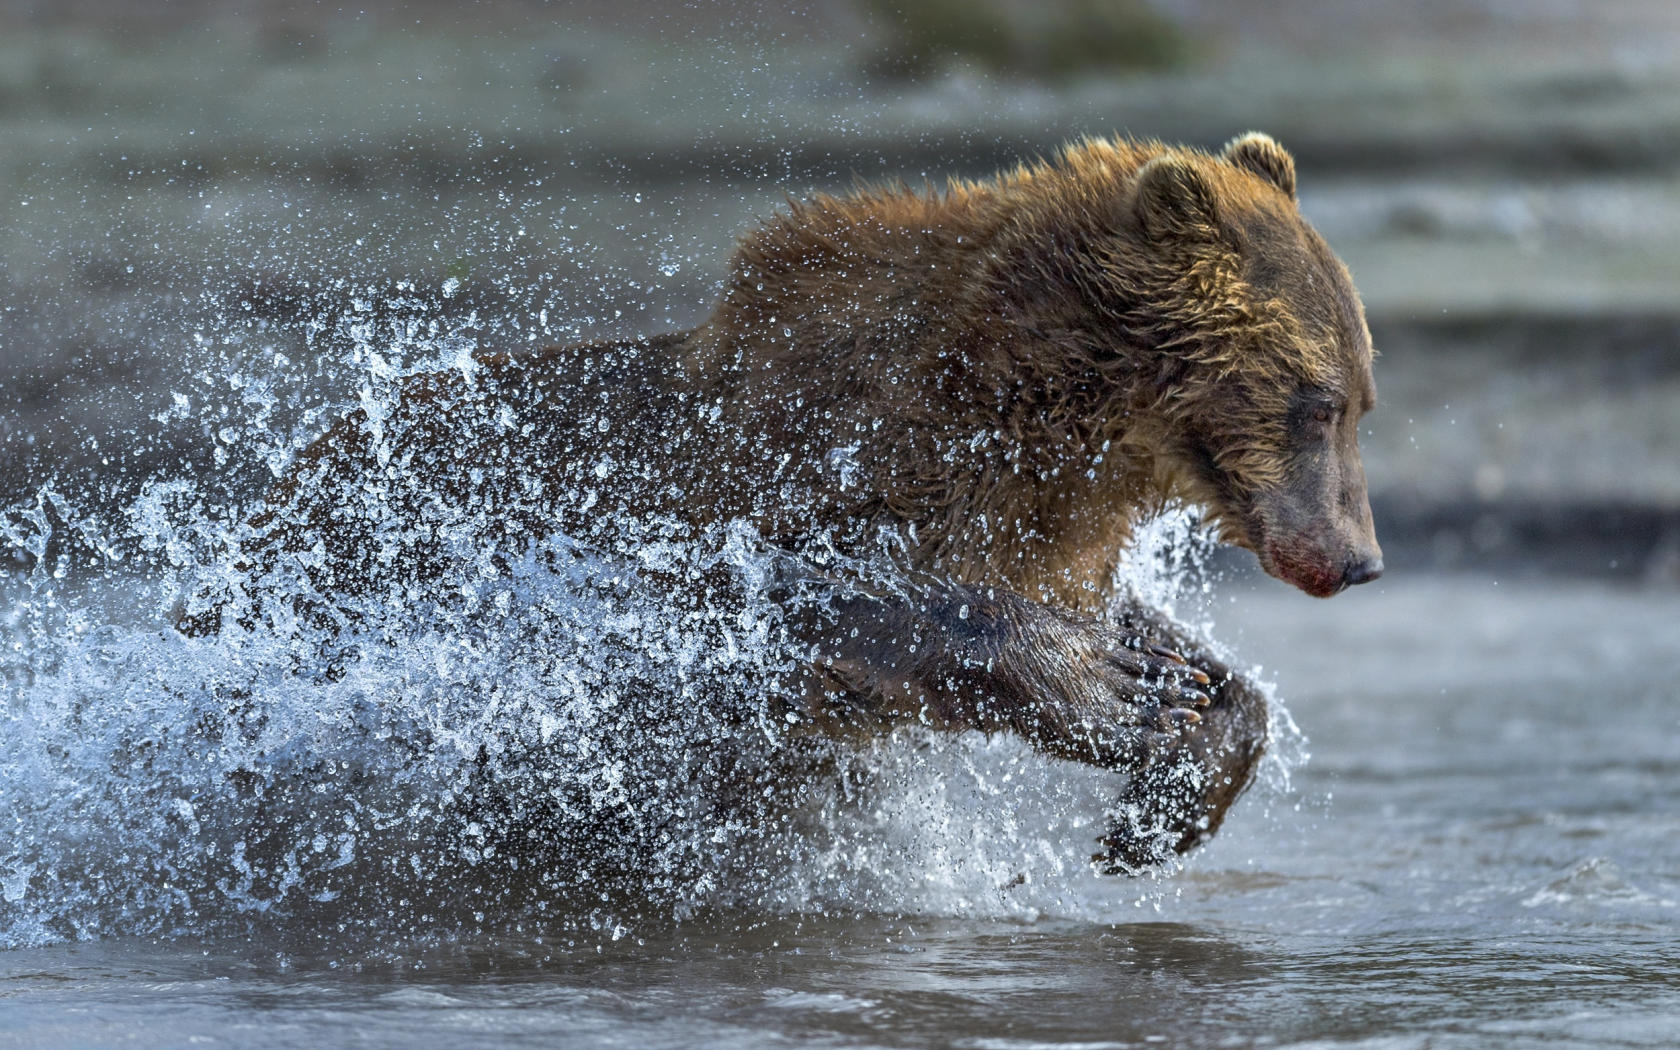 вода, брызги, медведь, бег